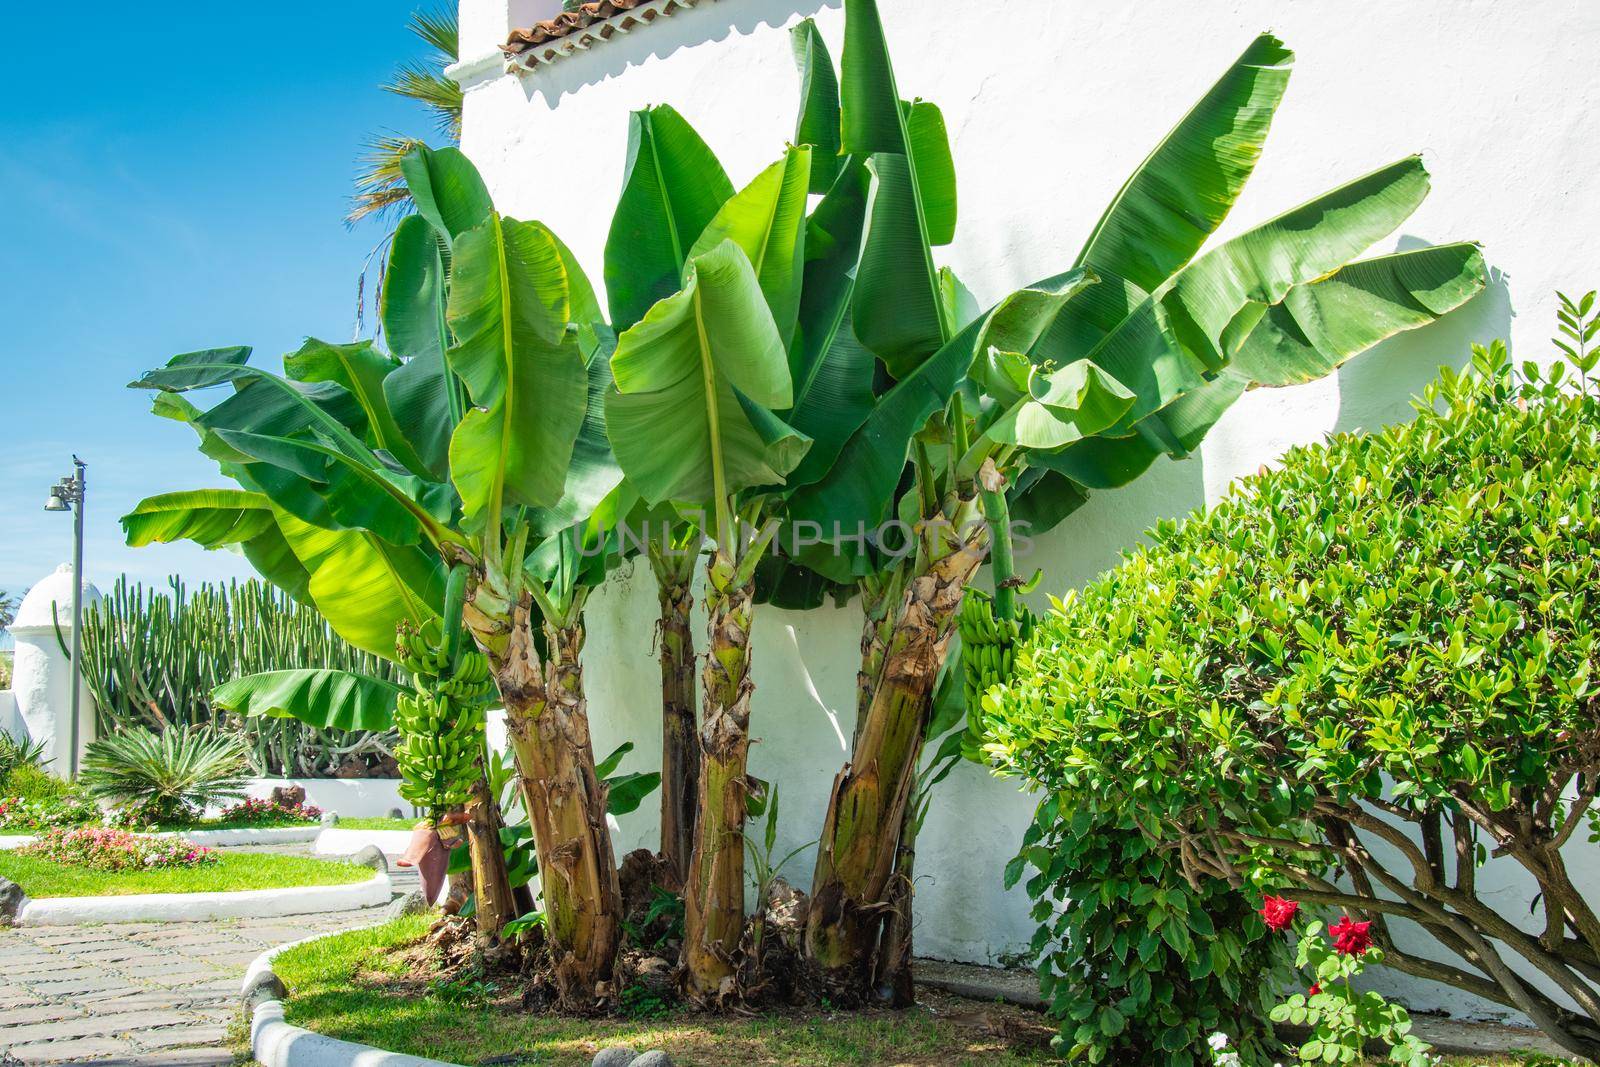 Beautiful shot of banana trees, Puerto de la Cruz, Tenerife, Spain by wektorygrafika